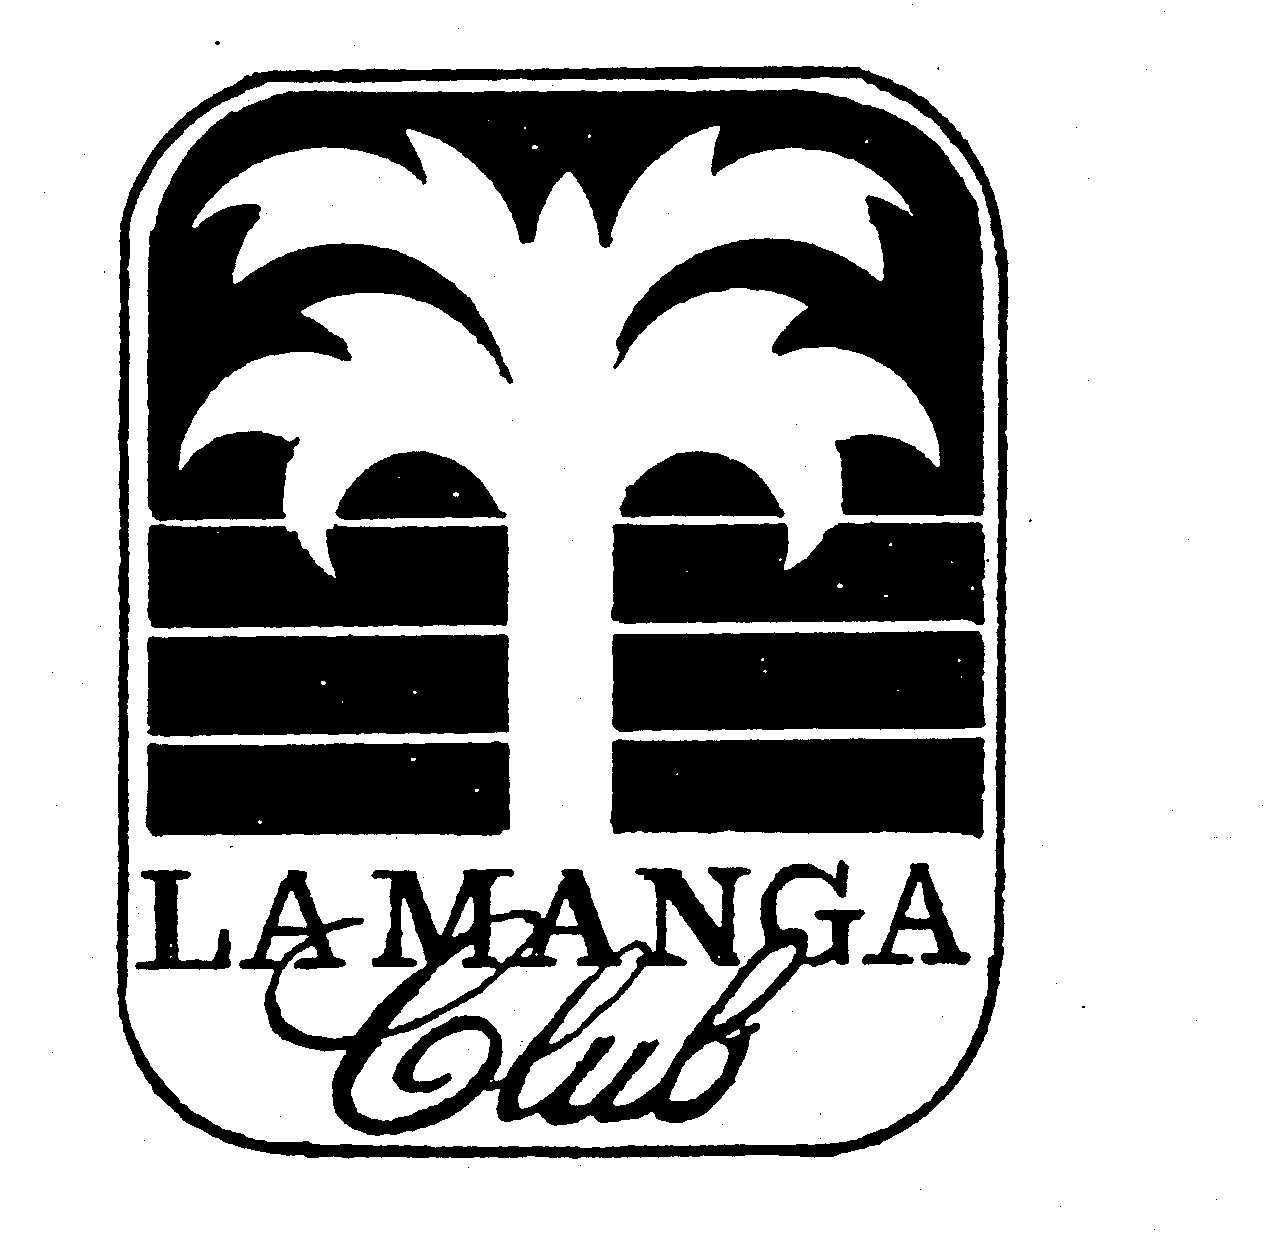  LA MANGA CLUB